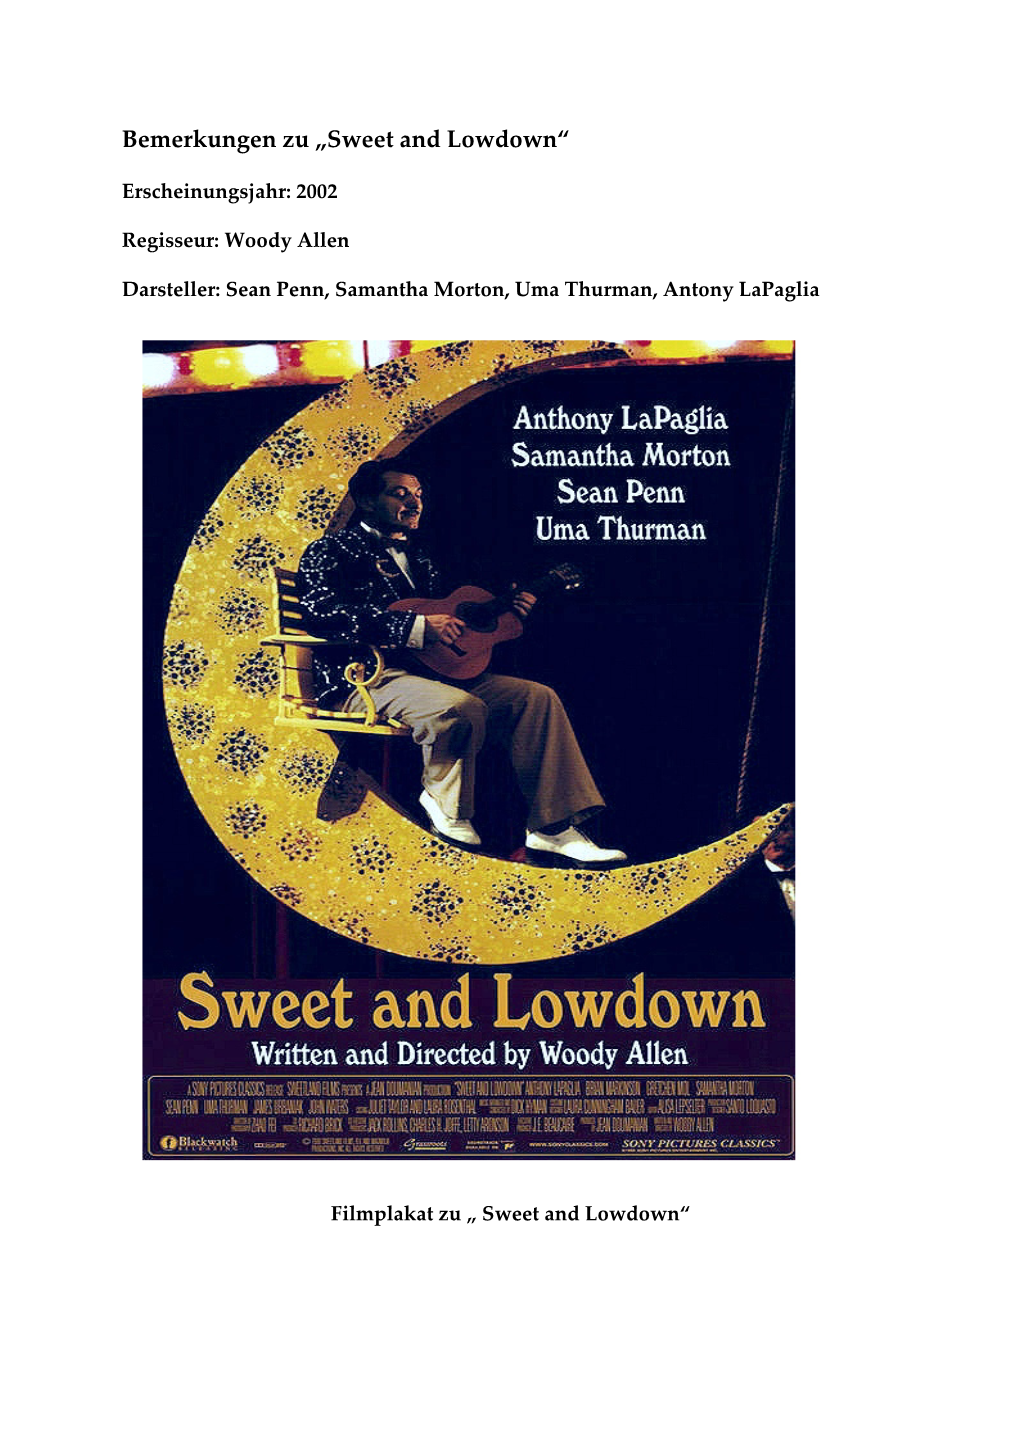 Sweet and Lowdown“